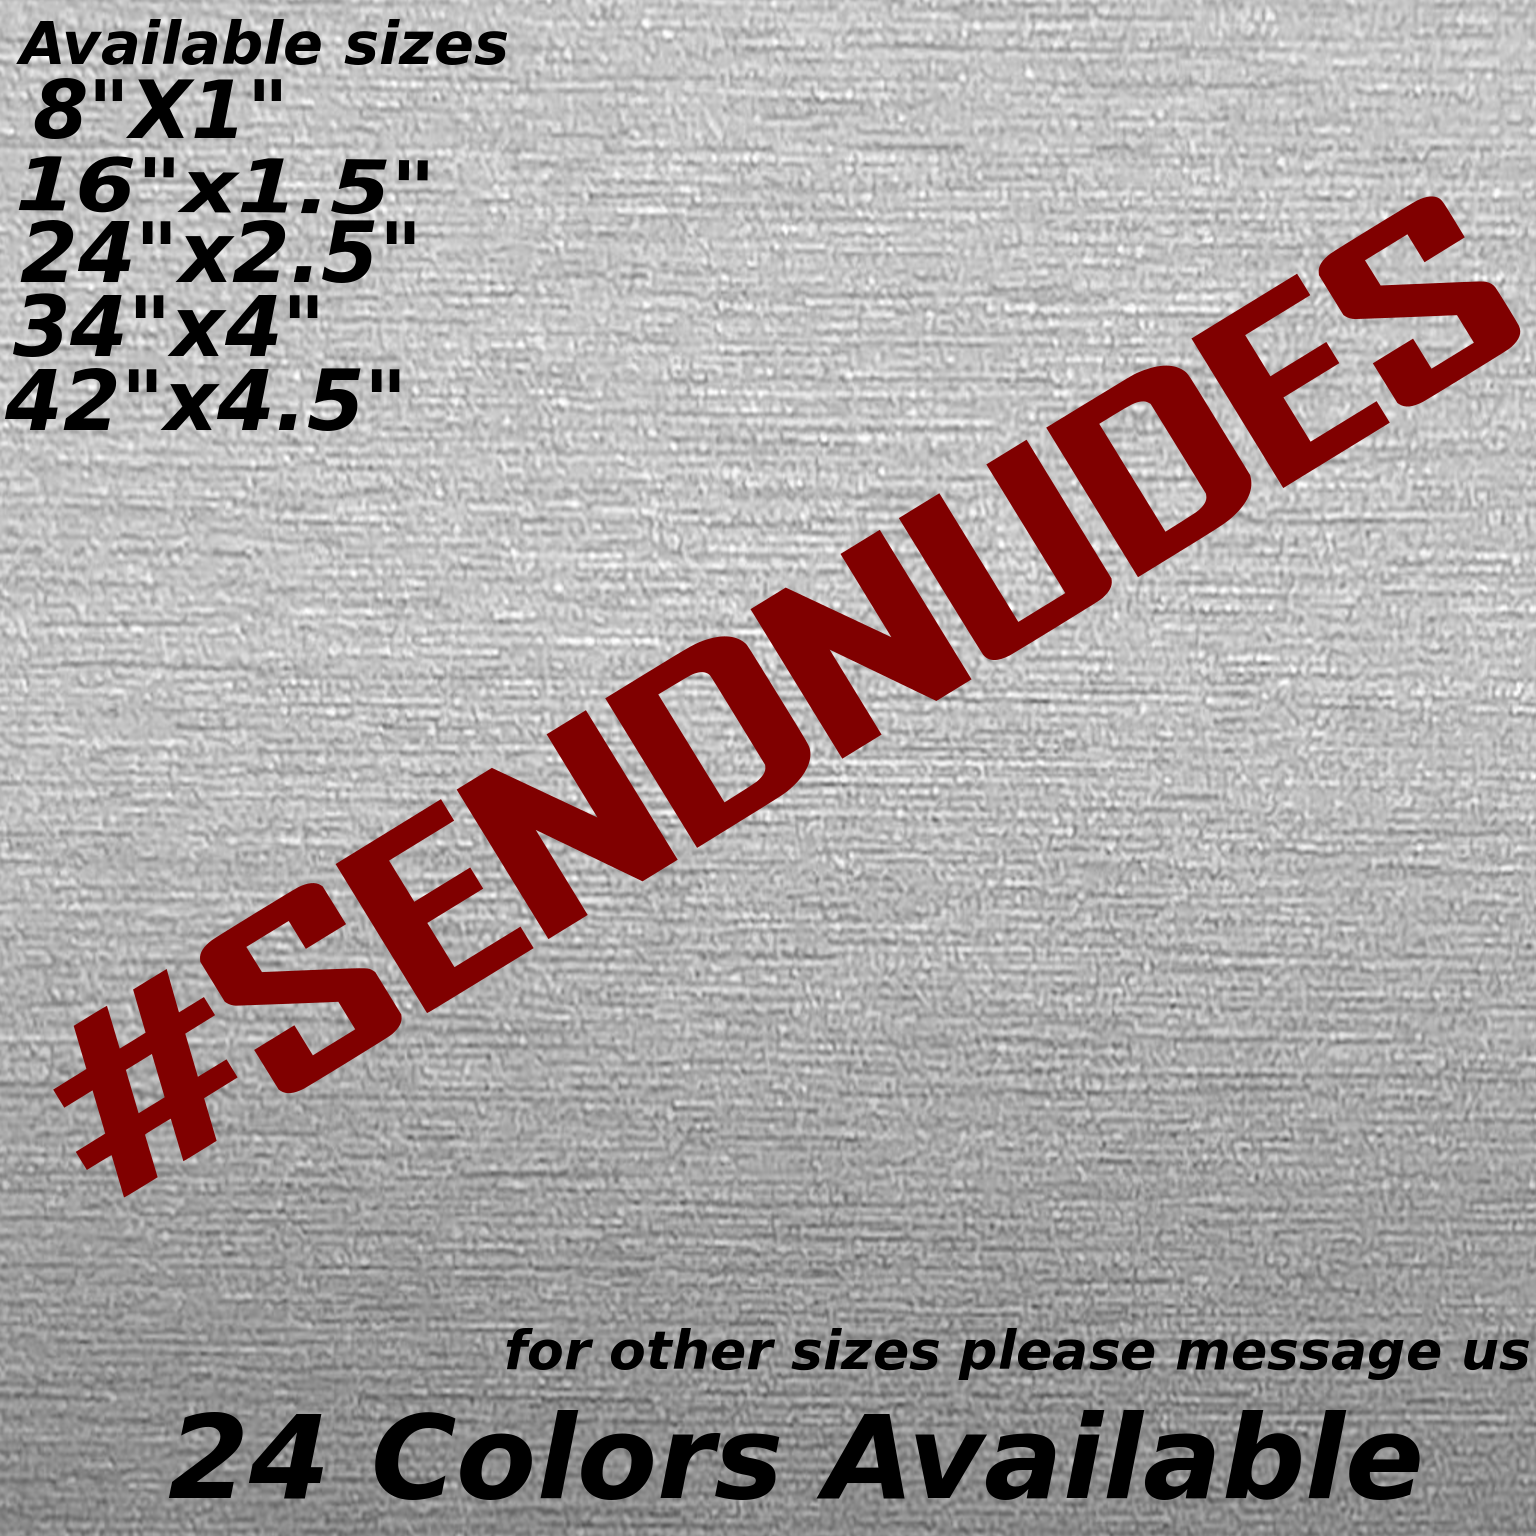 #SENDNUDES Decal Sticker Send Nudes Cars JDM funny humor attention grabbing